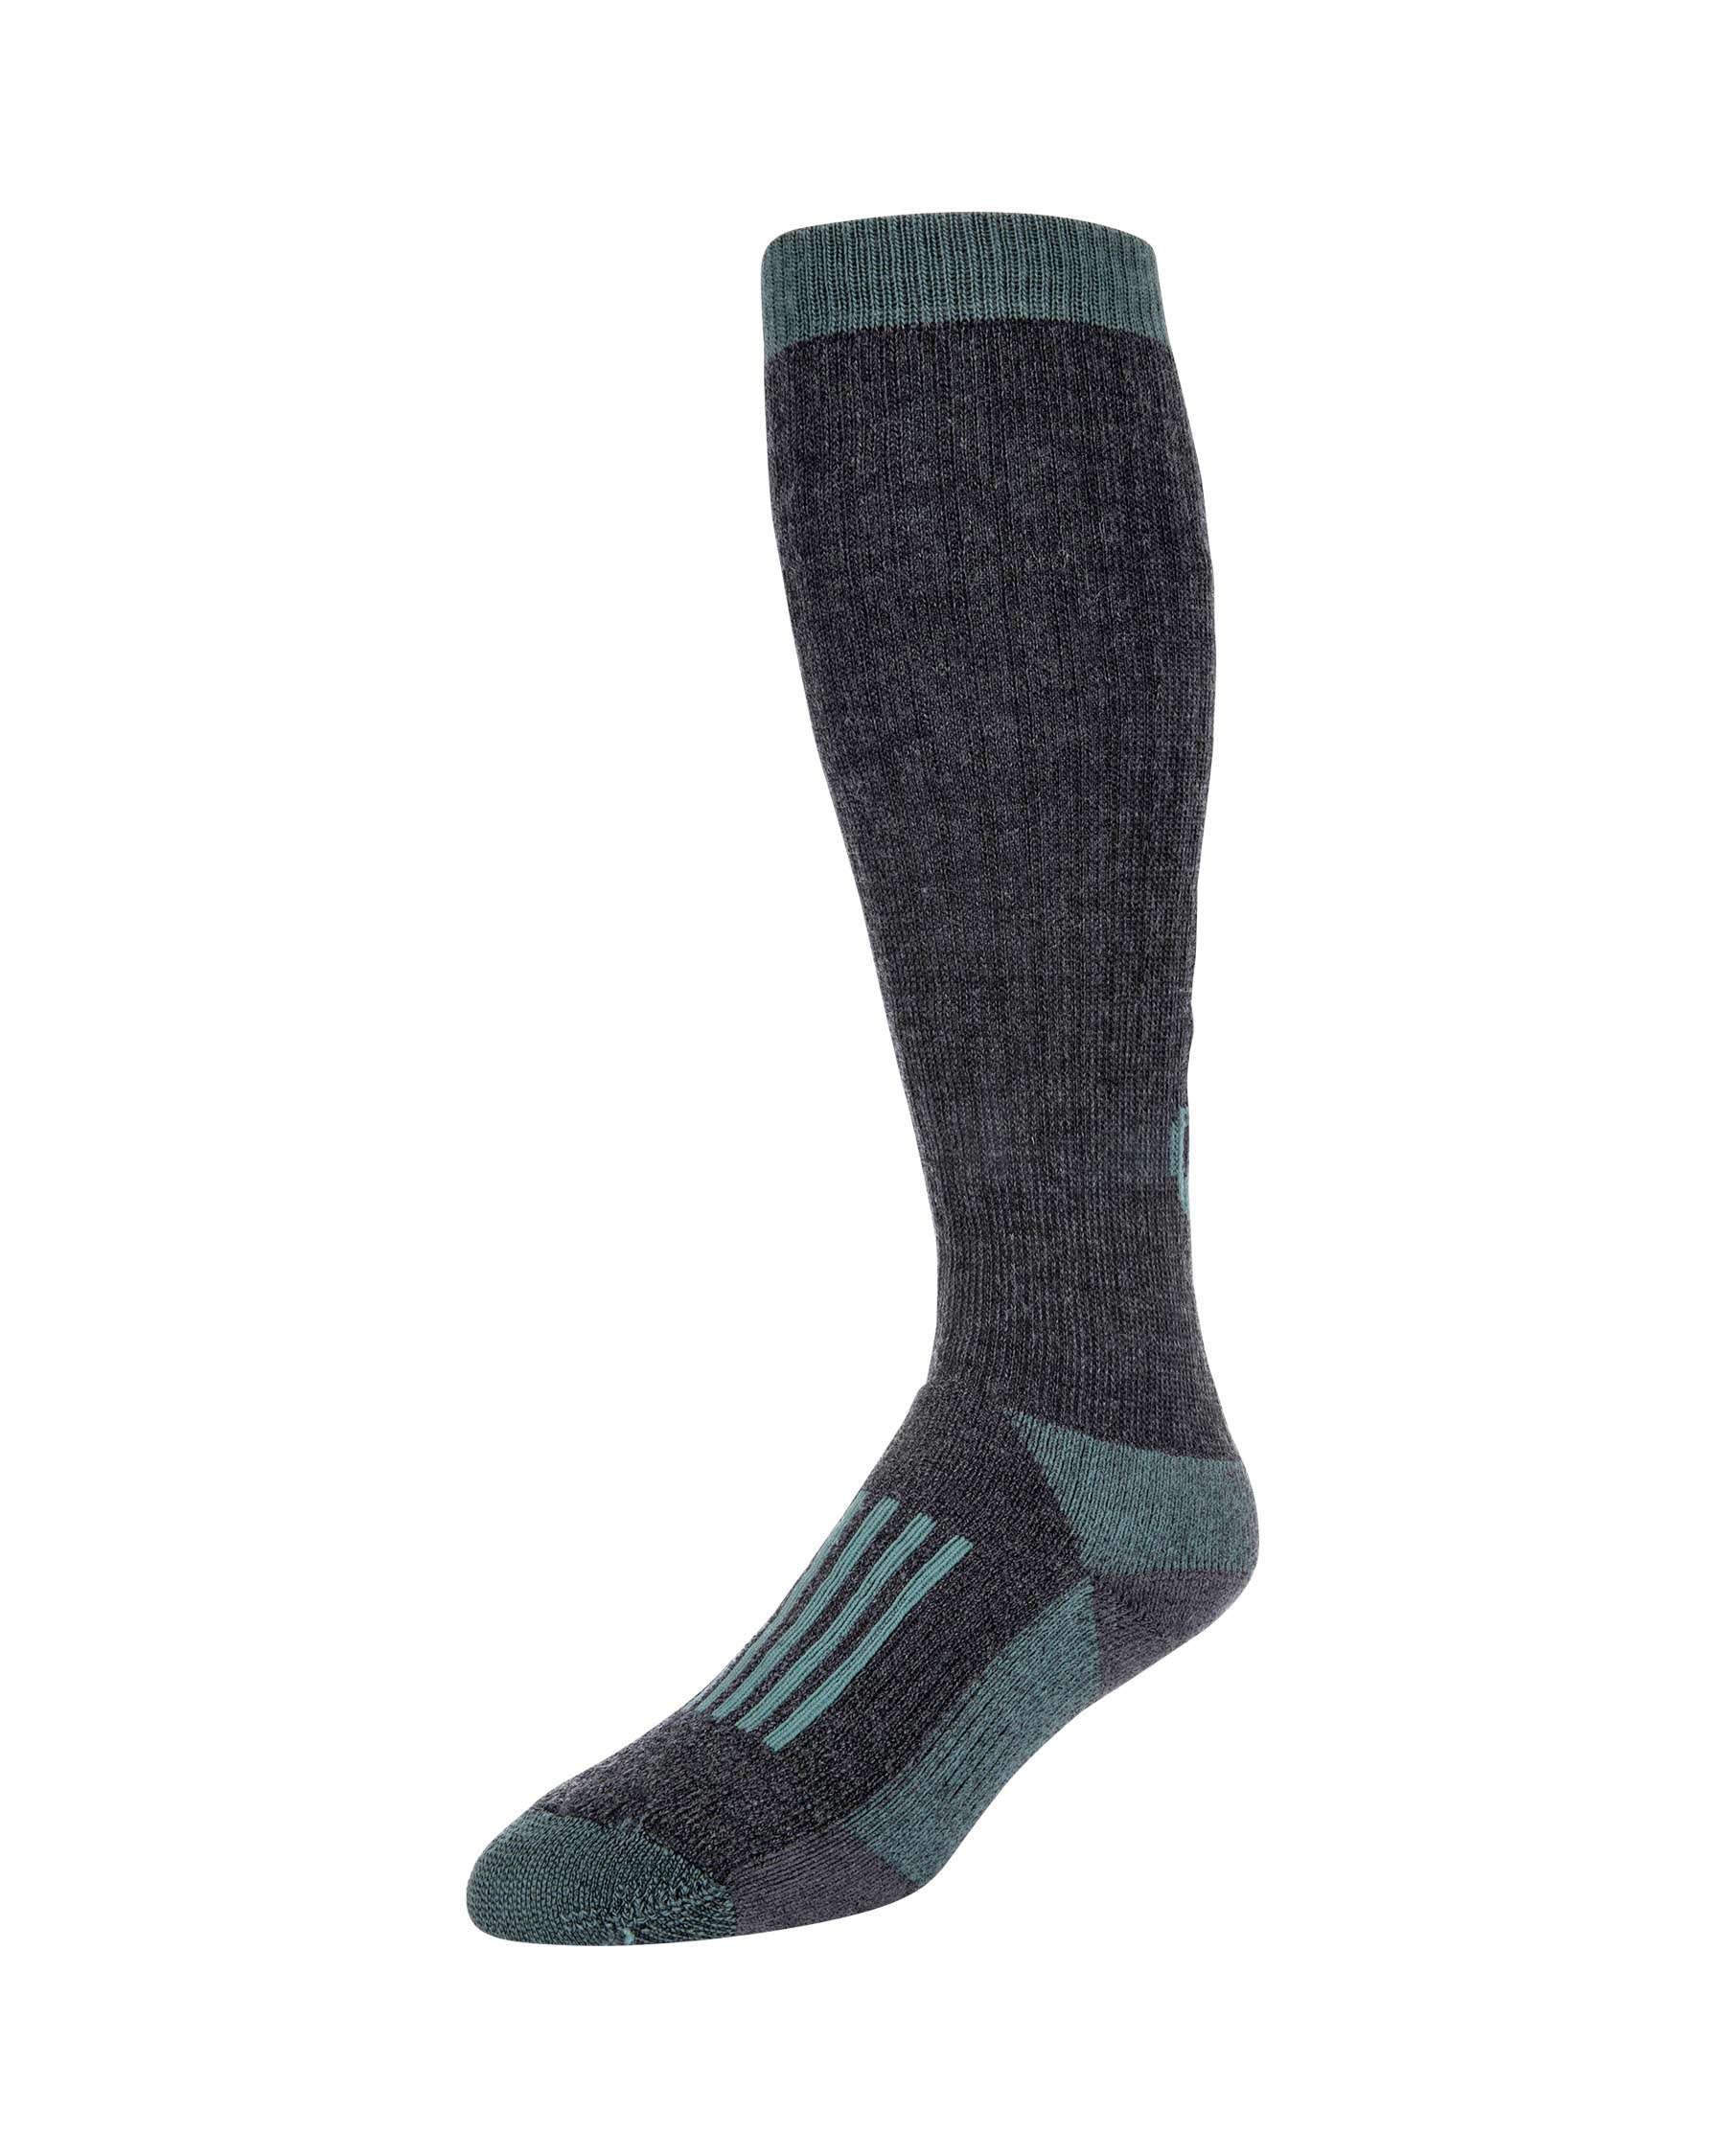 Action Socks, Thermal Women